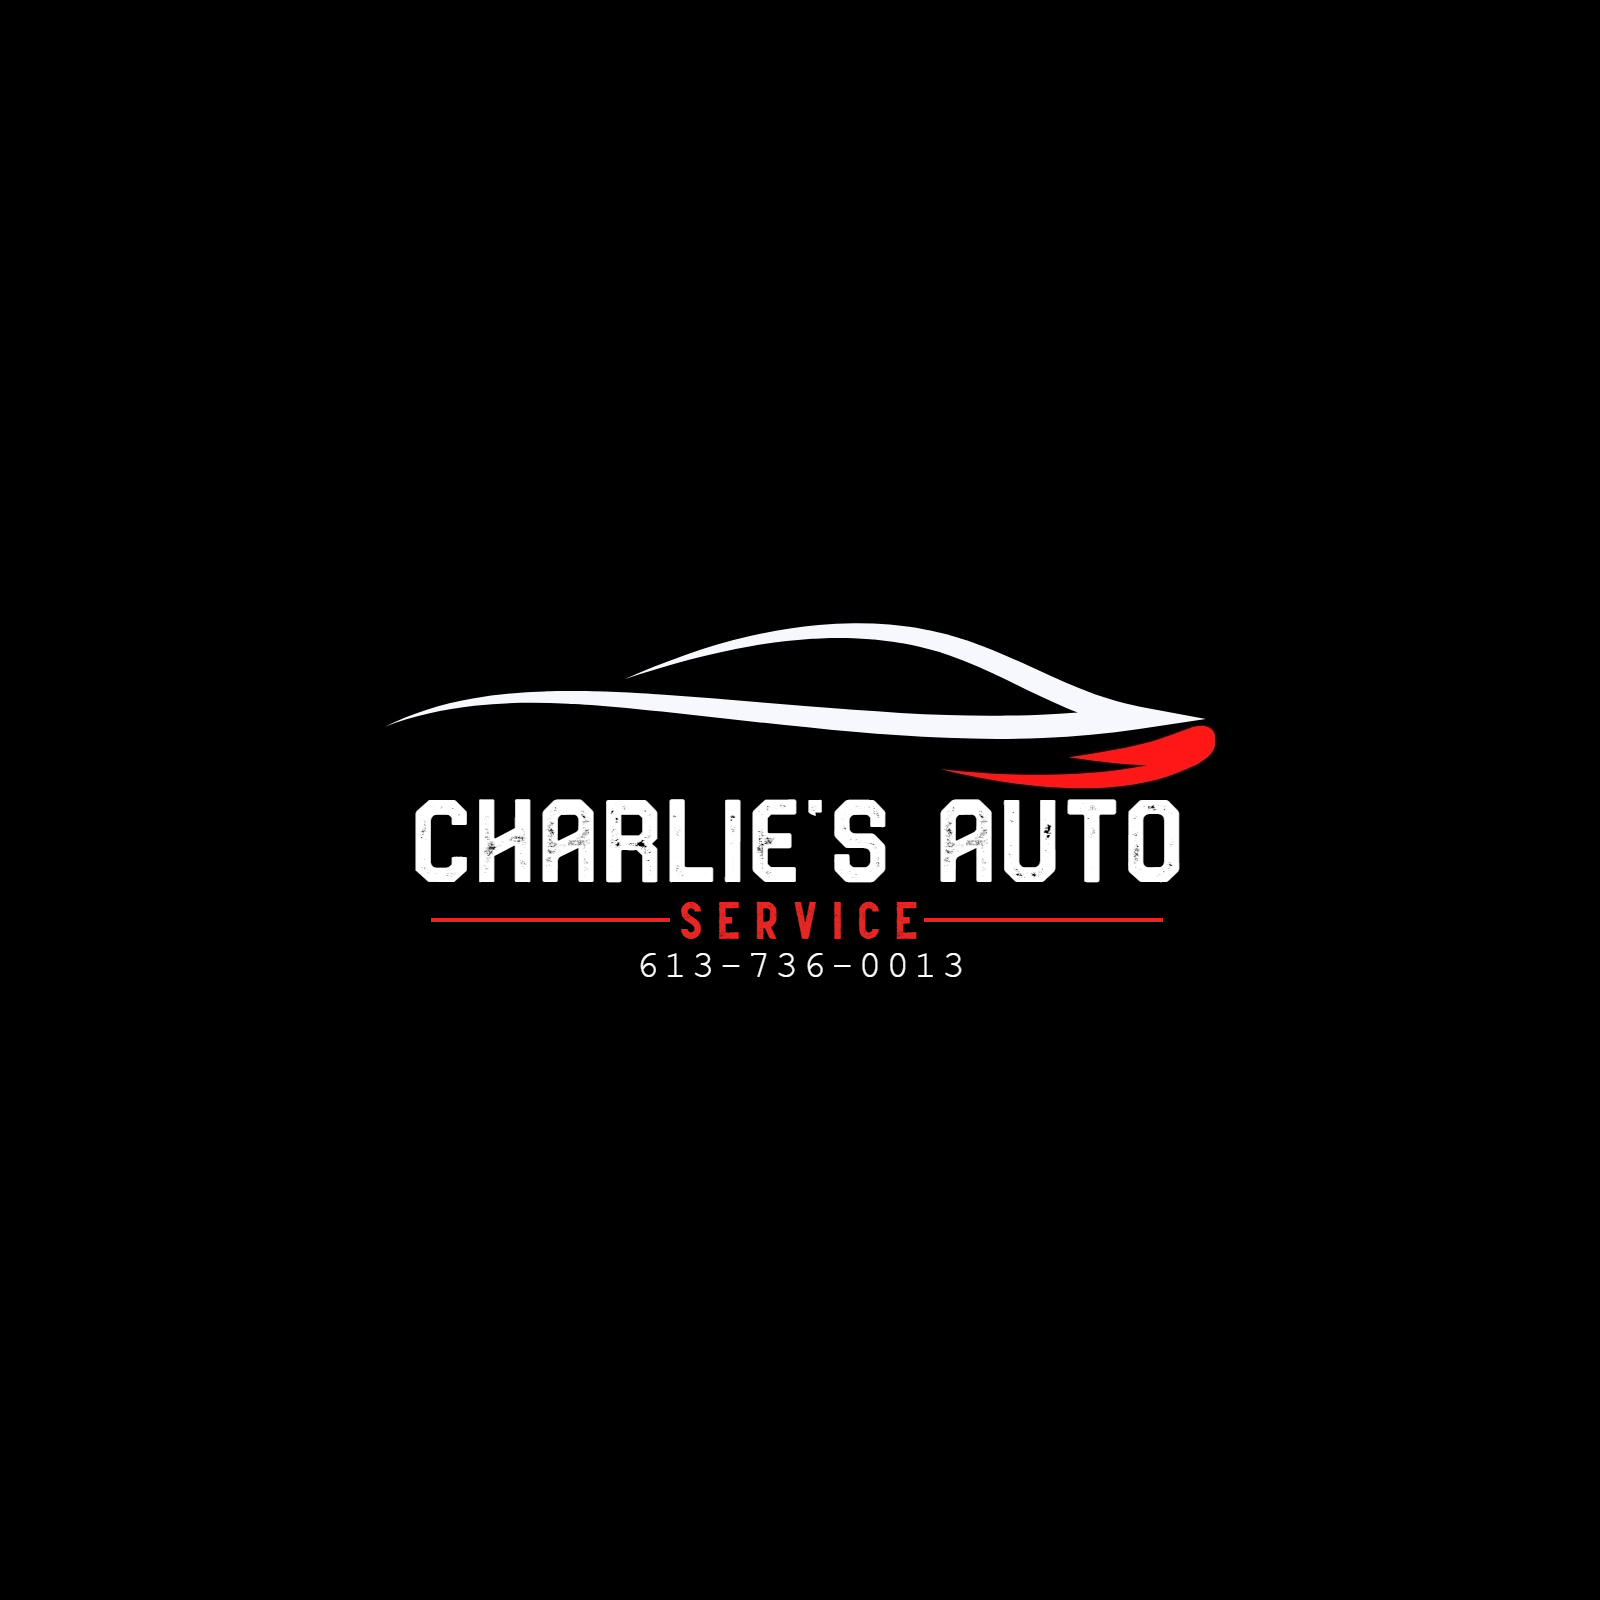 Charlie's Auto Service